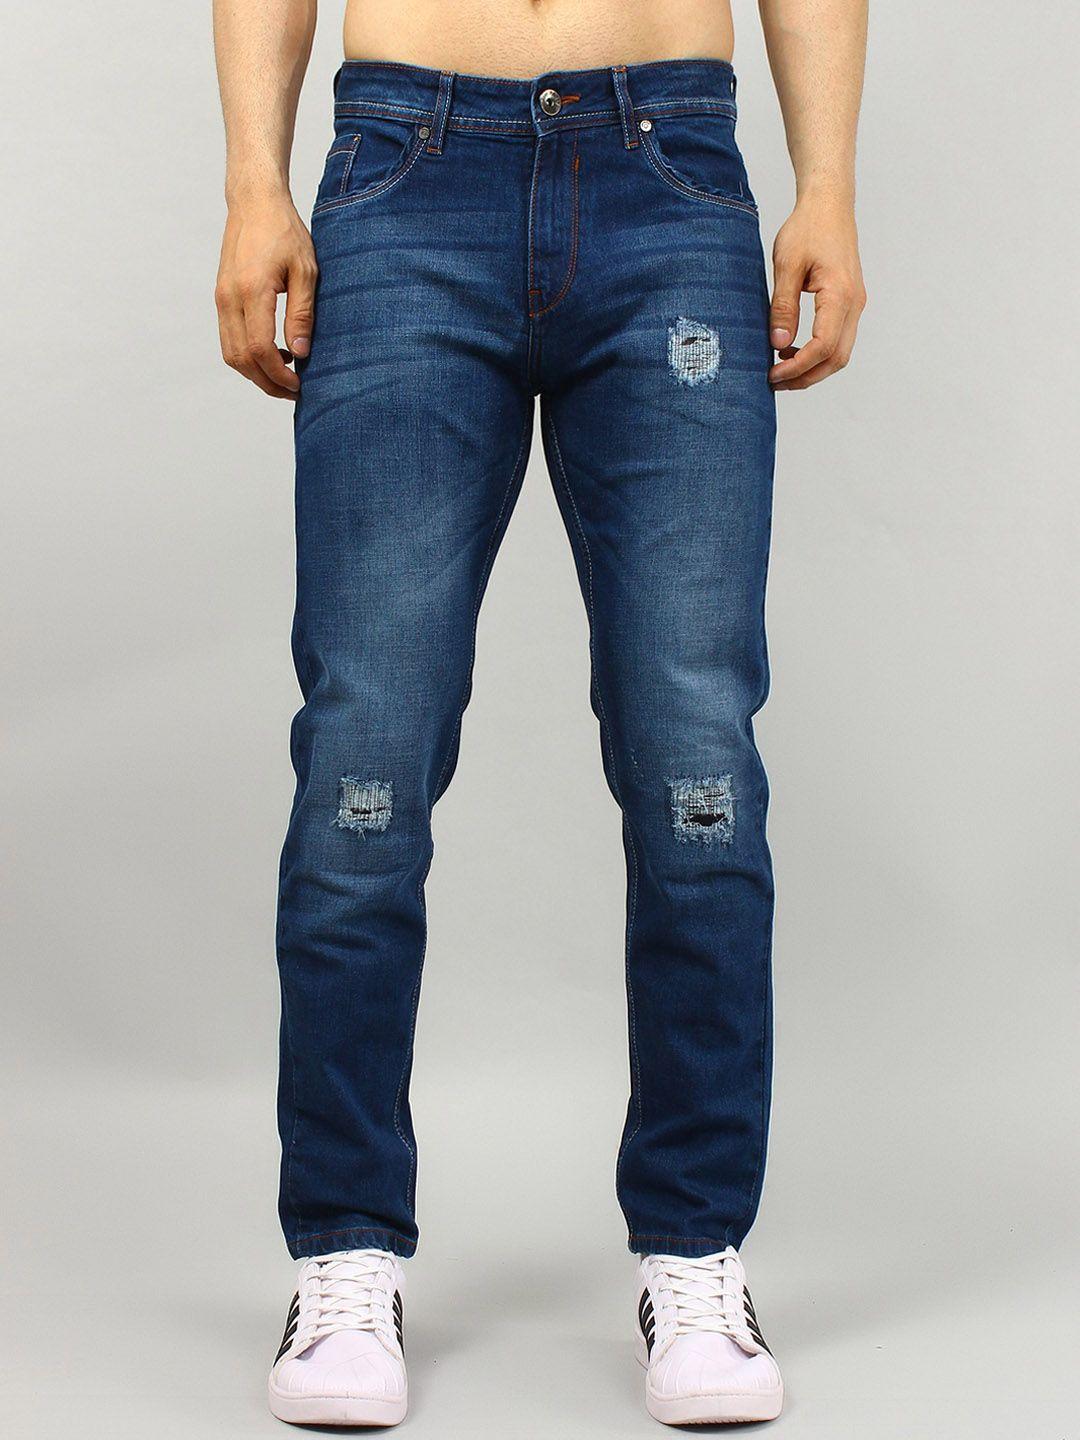 tim-paris-men-skinny-fit-mildly-distressed-light-fade-stretchable-jeans